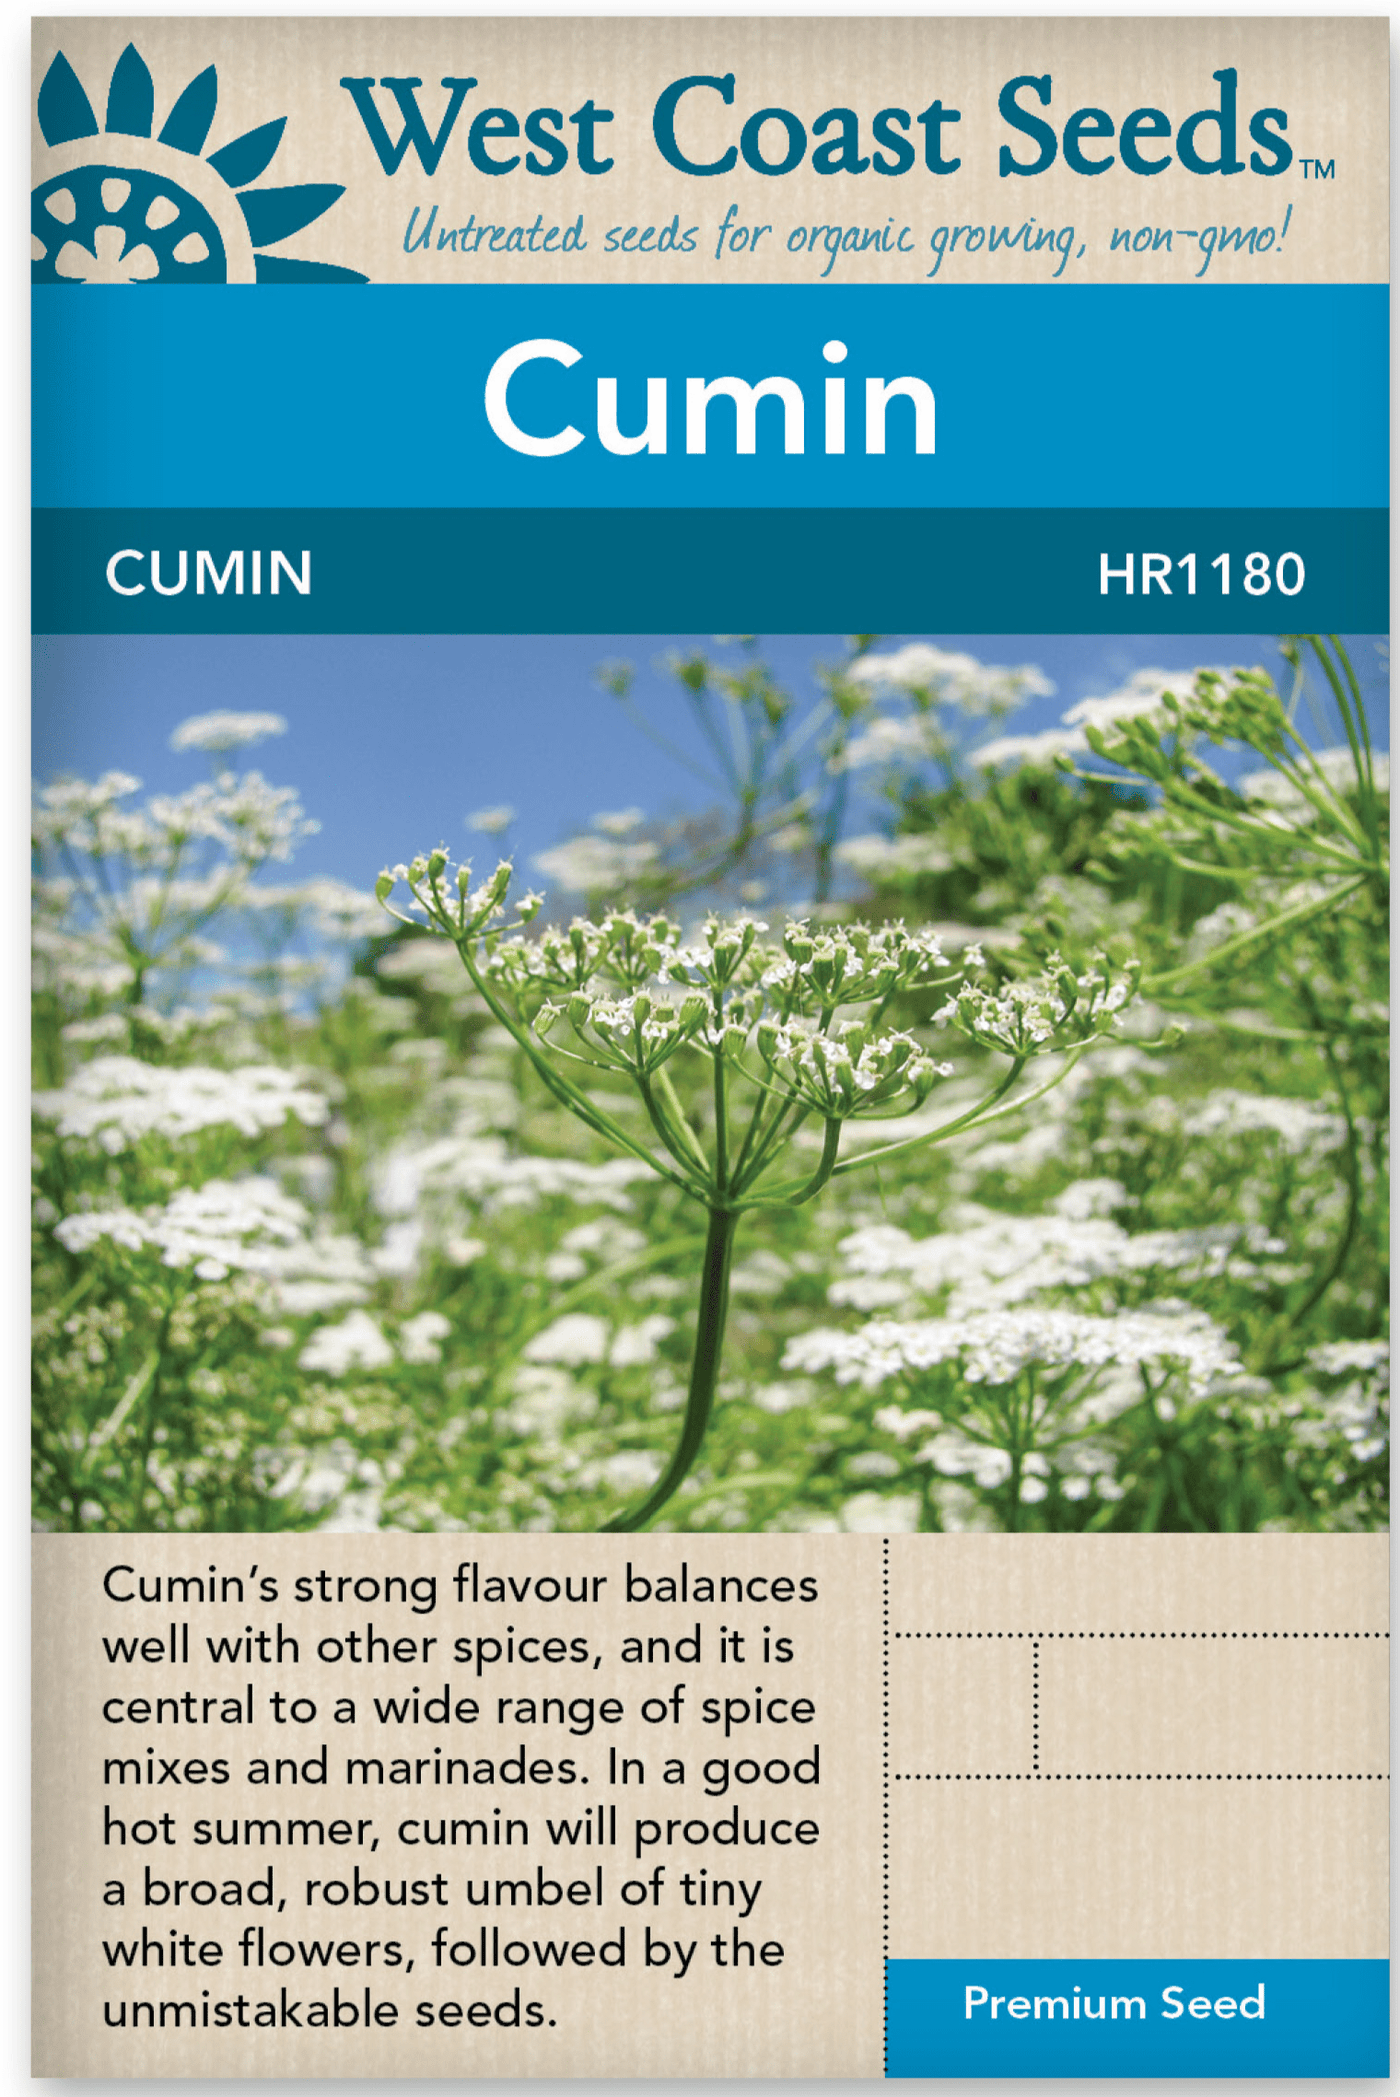 Cumin - West Coast Seeds